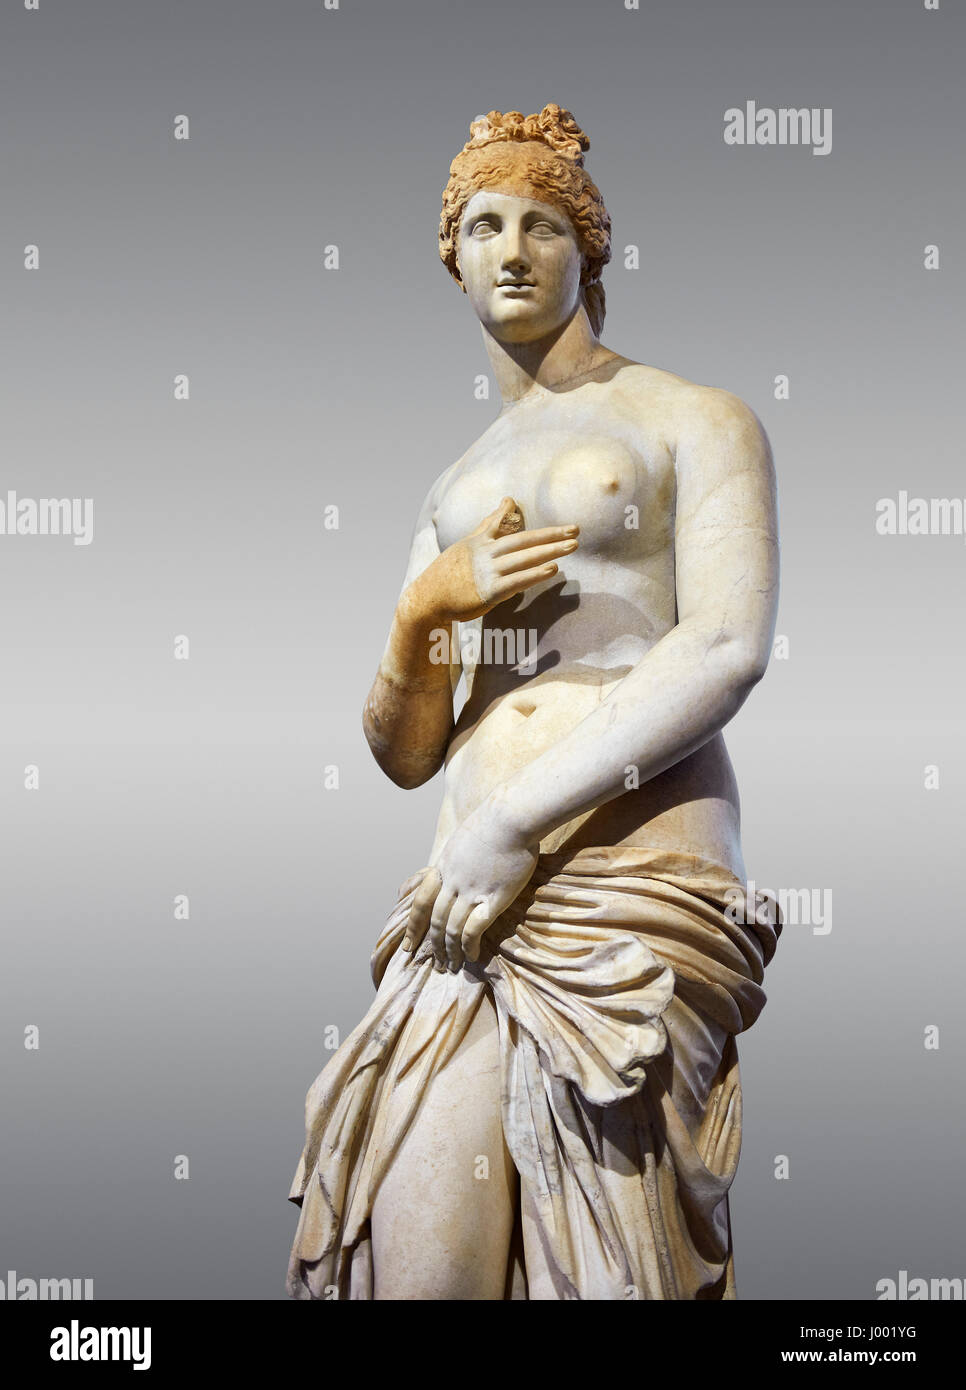 Venus aphrodite hi-res stock photography and images - Alamy